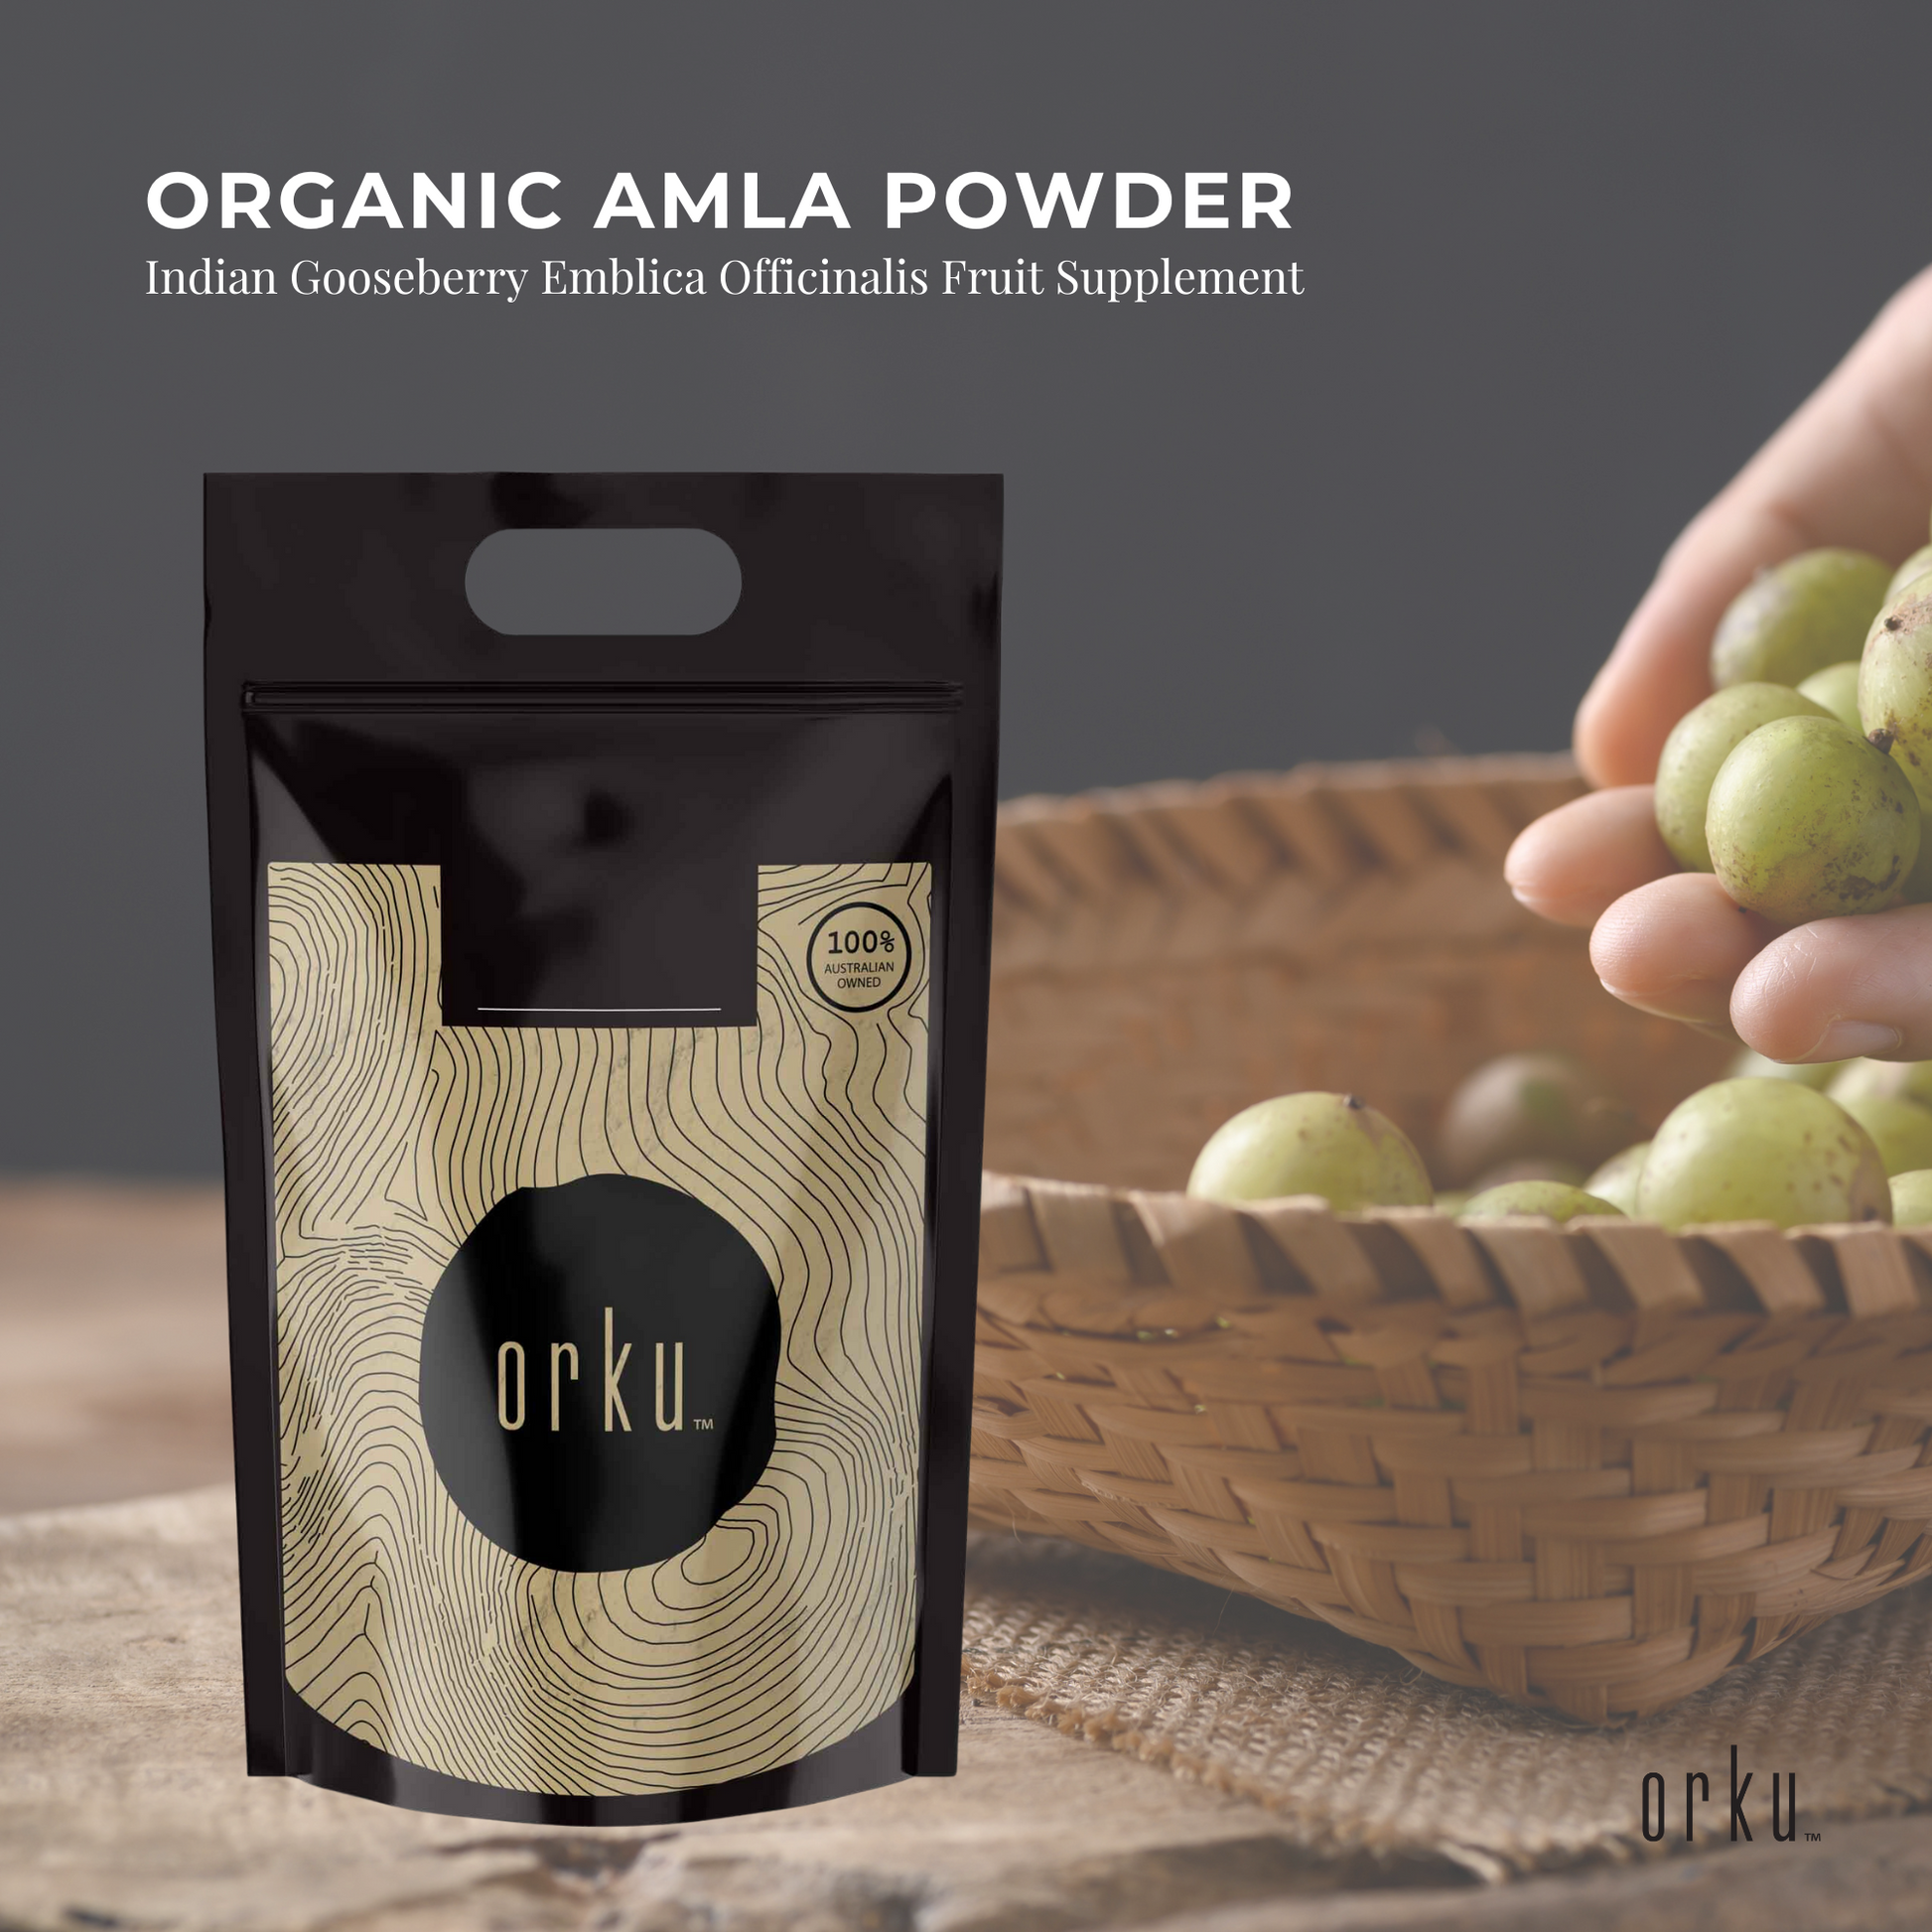 5Kg Organic Amla Powder Indian Gooseberry Emblica Officinalis Fruit Supplement